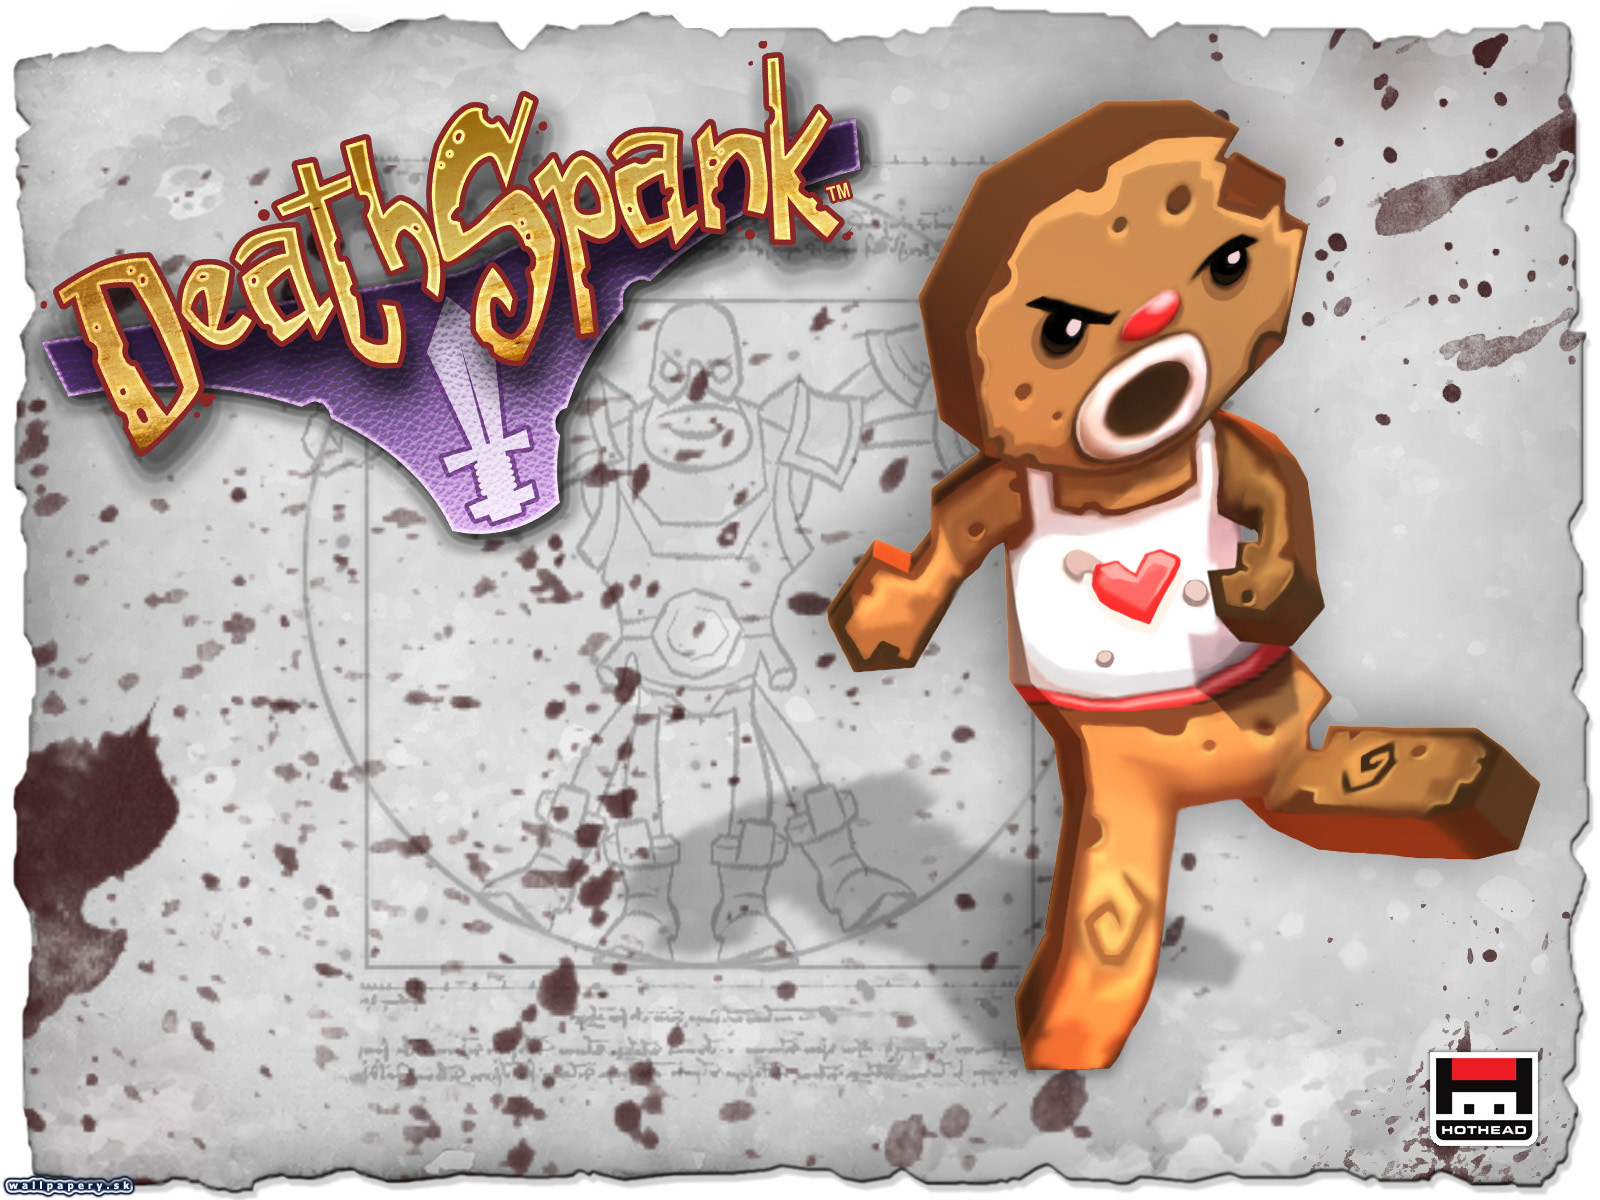 DeathSpank - wallpaper 11